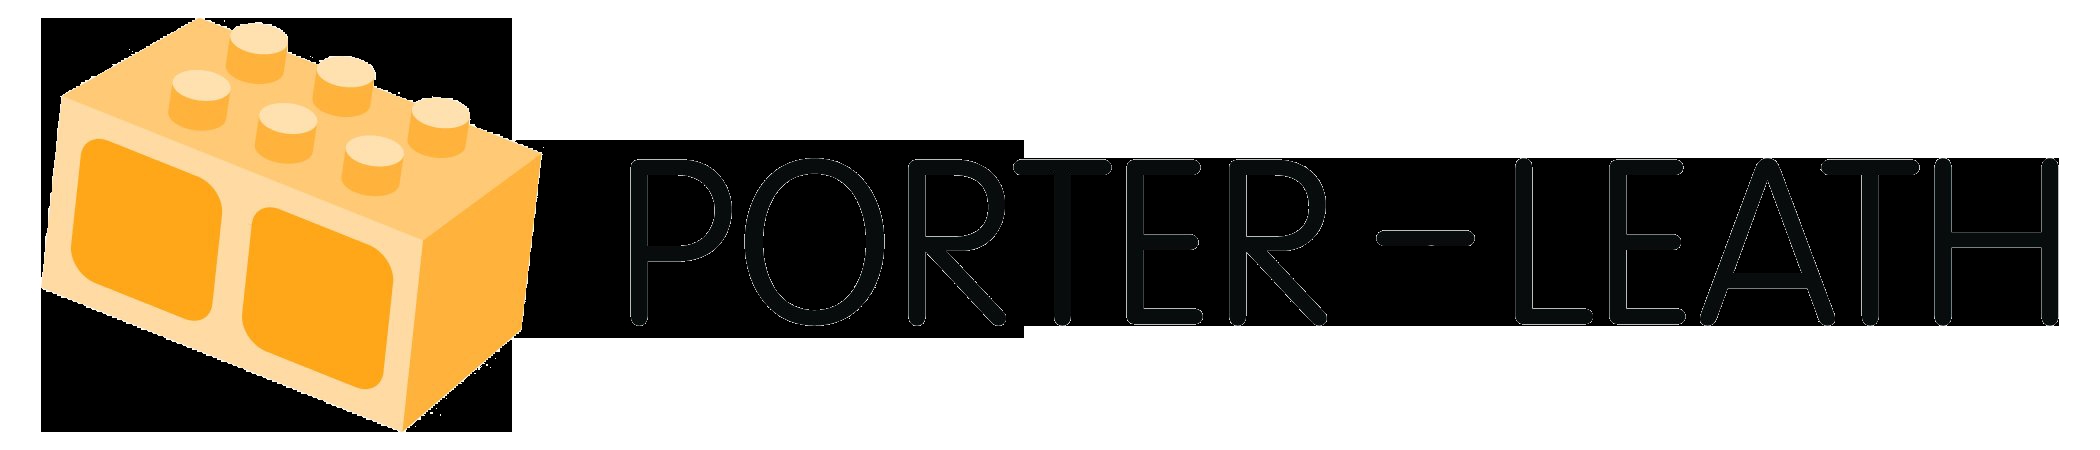 Porter-Leath Company Logo